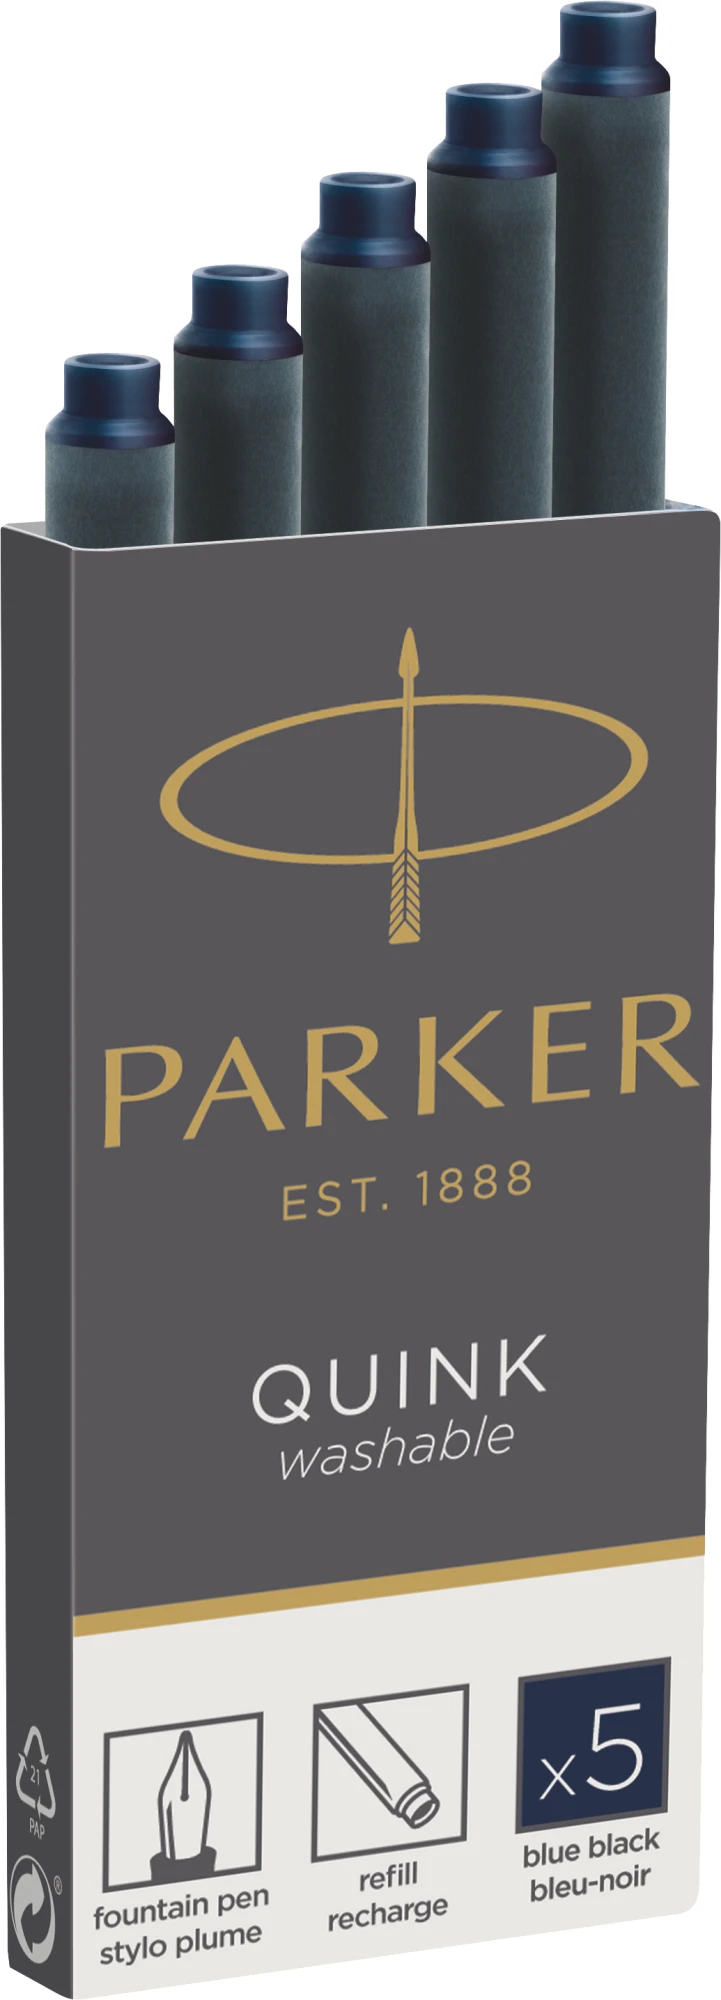 Parker Чернила (картридж) "Cartridge Quink" темно-синие, 5 штук,